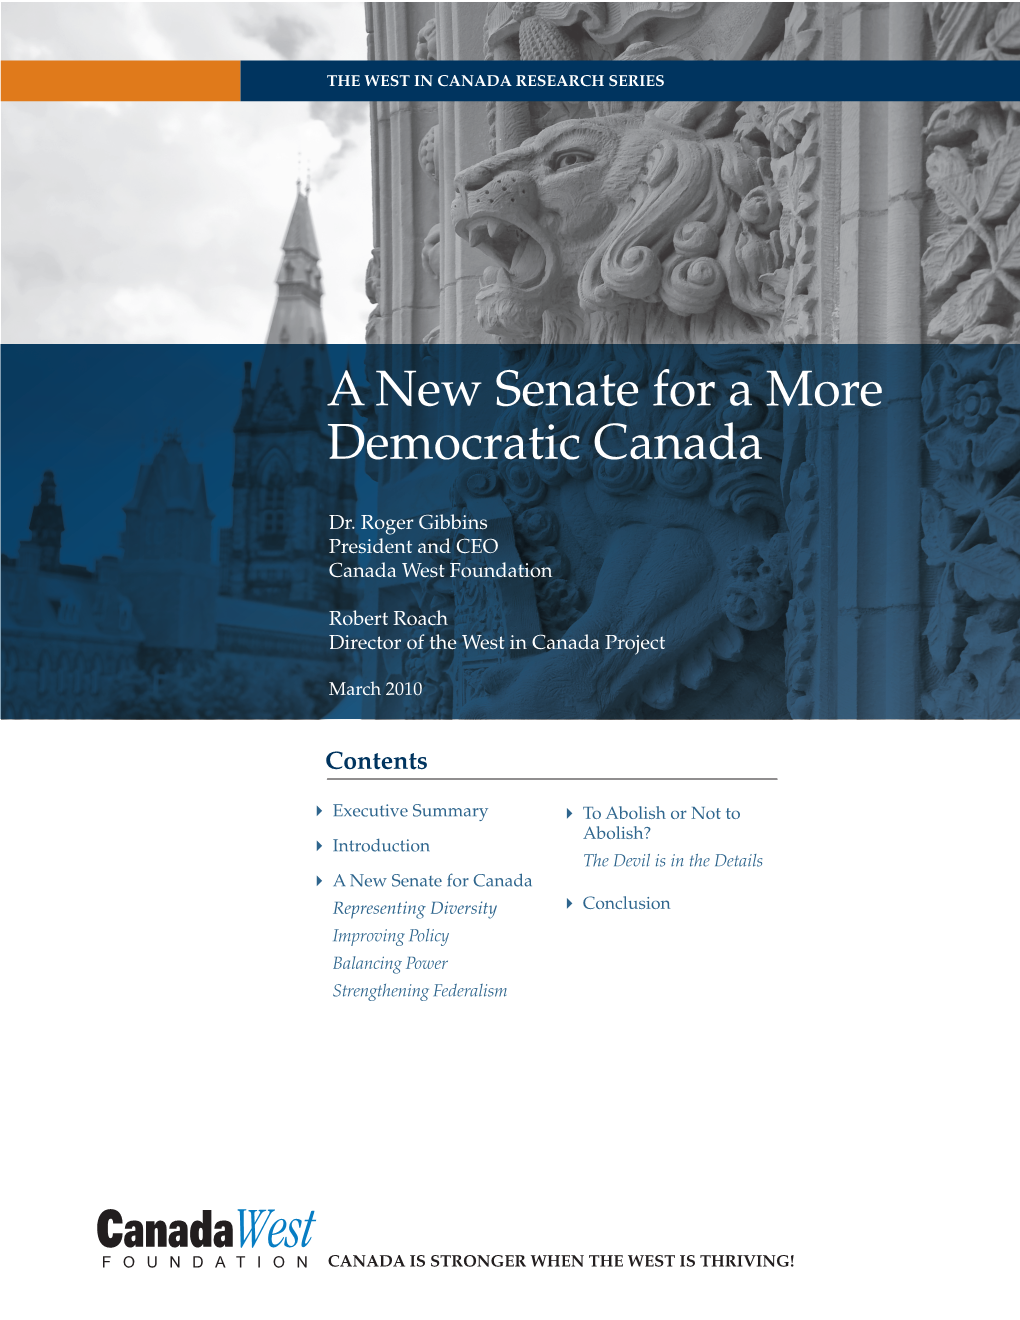 A New Senate for a More Democratic Canada